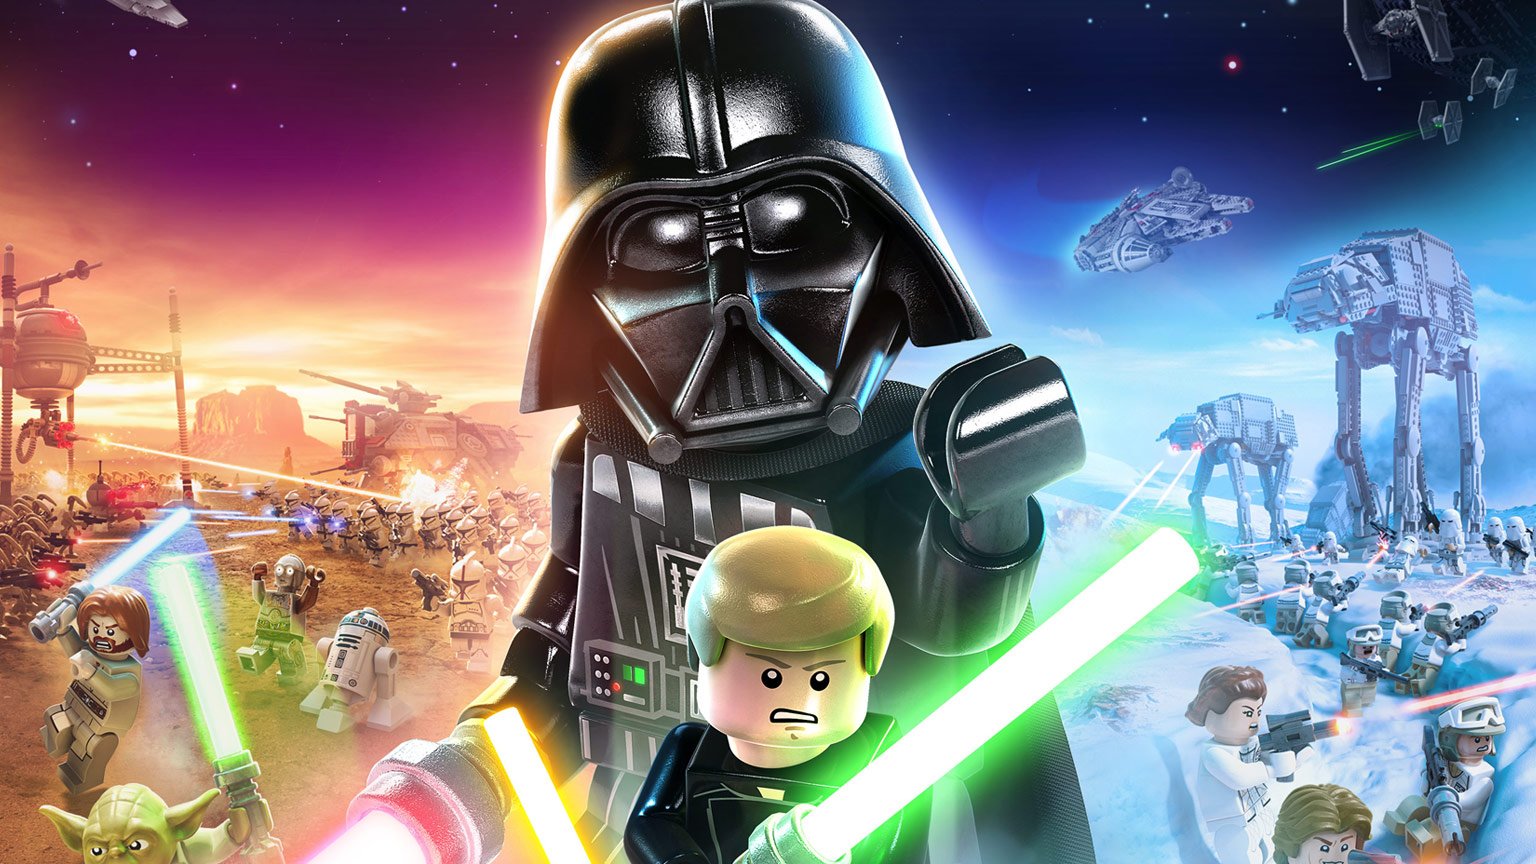 lego-star-wars-skywalker-saga-banner.jpg